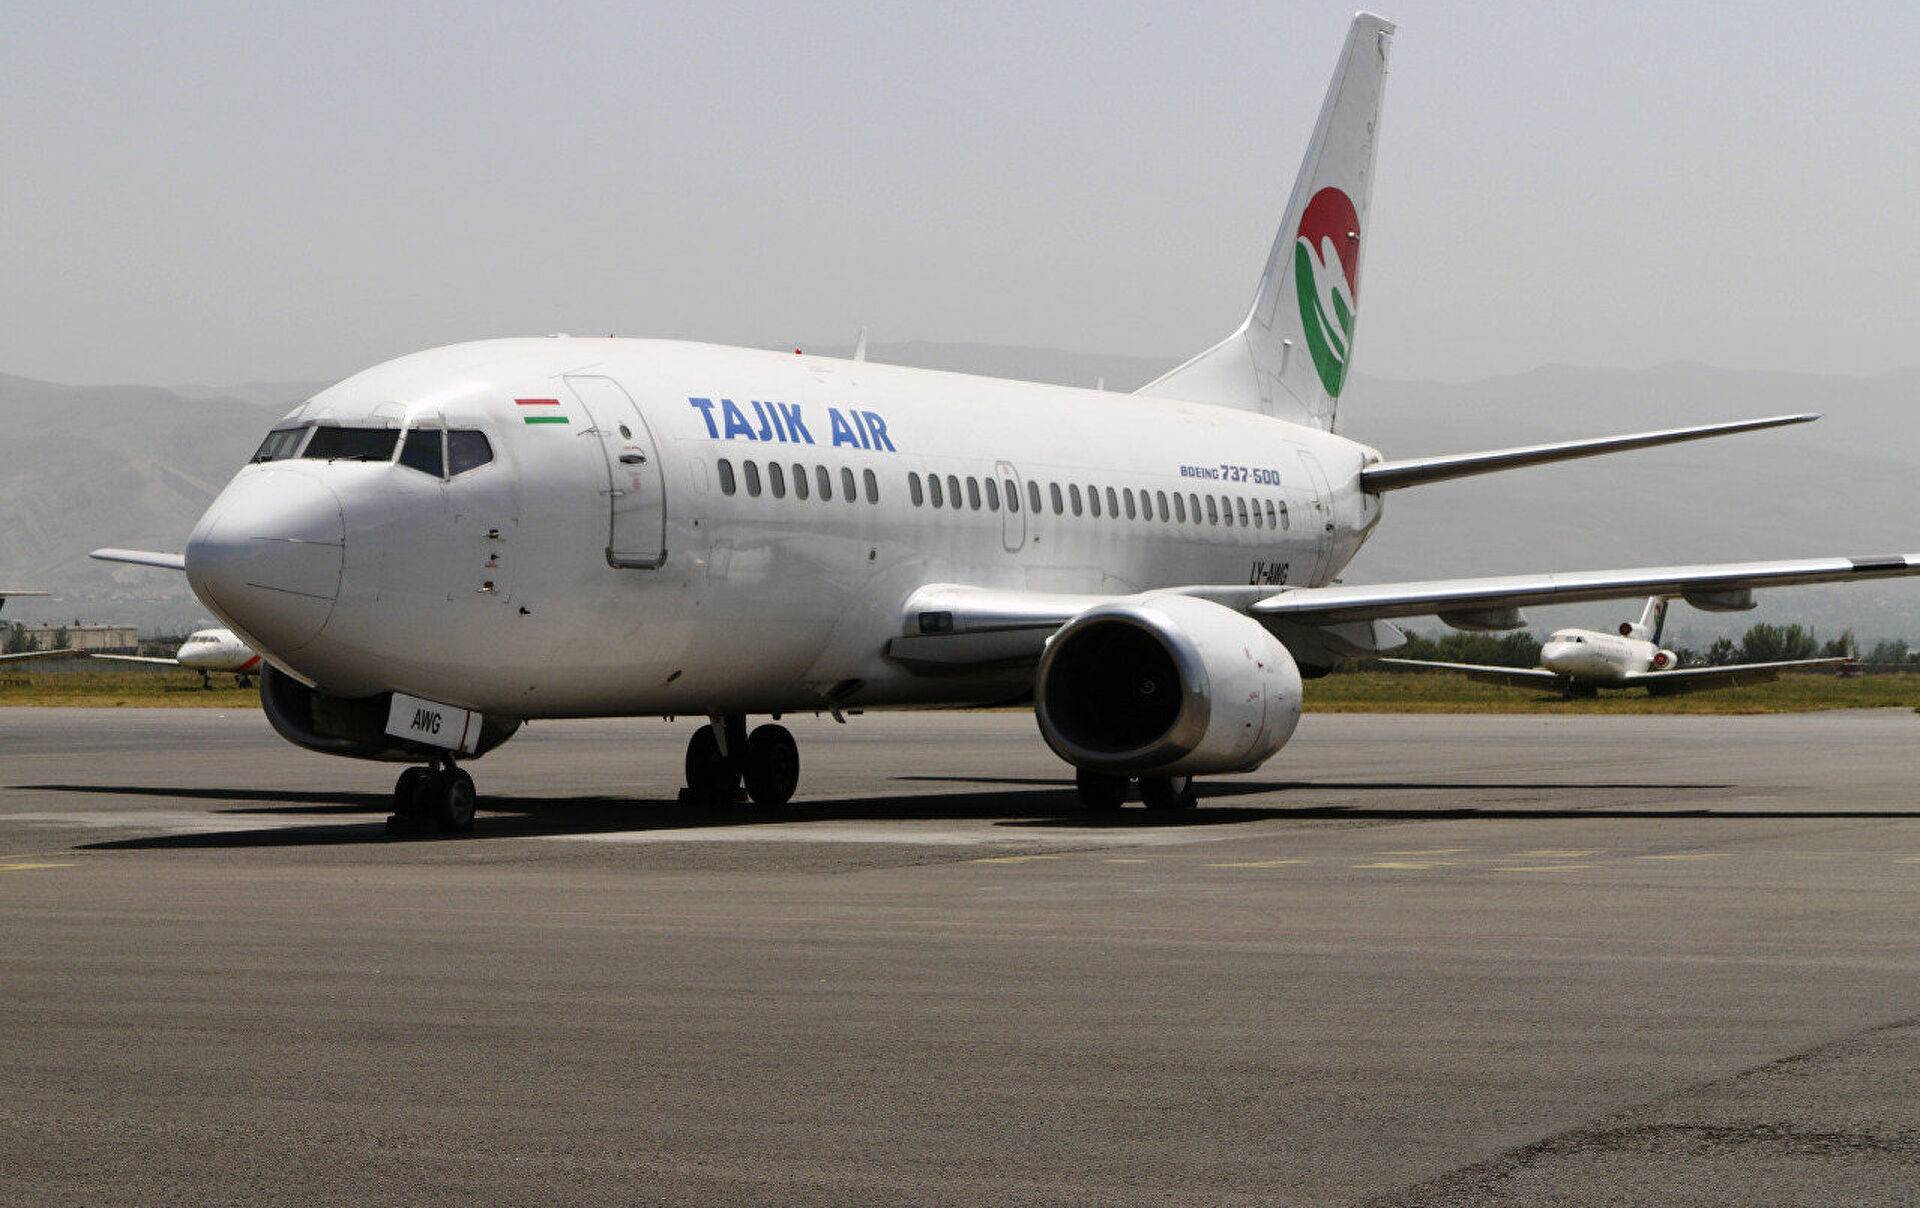 Авиакомпания таджик эйр (tajik air)